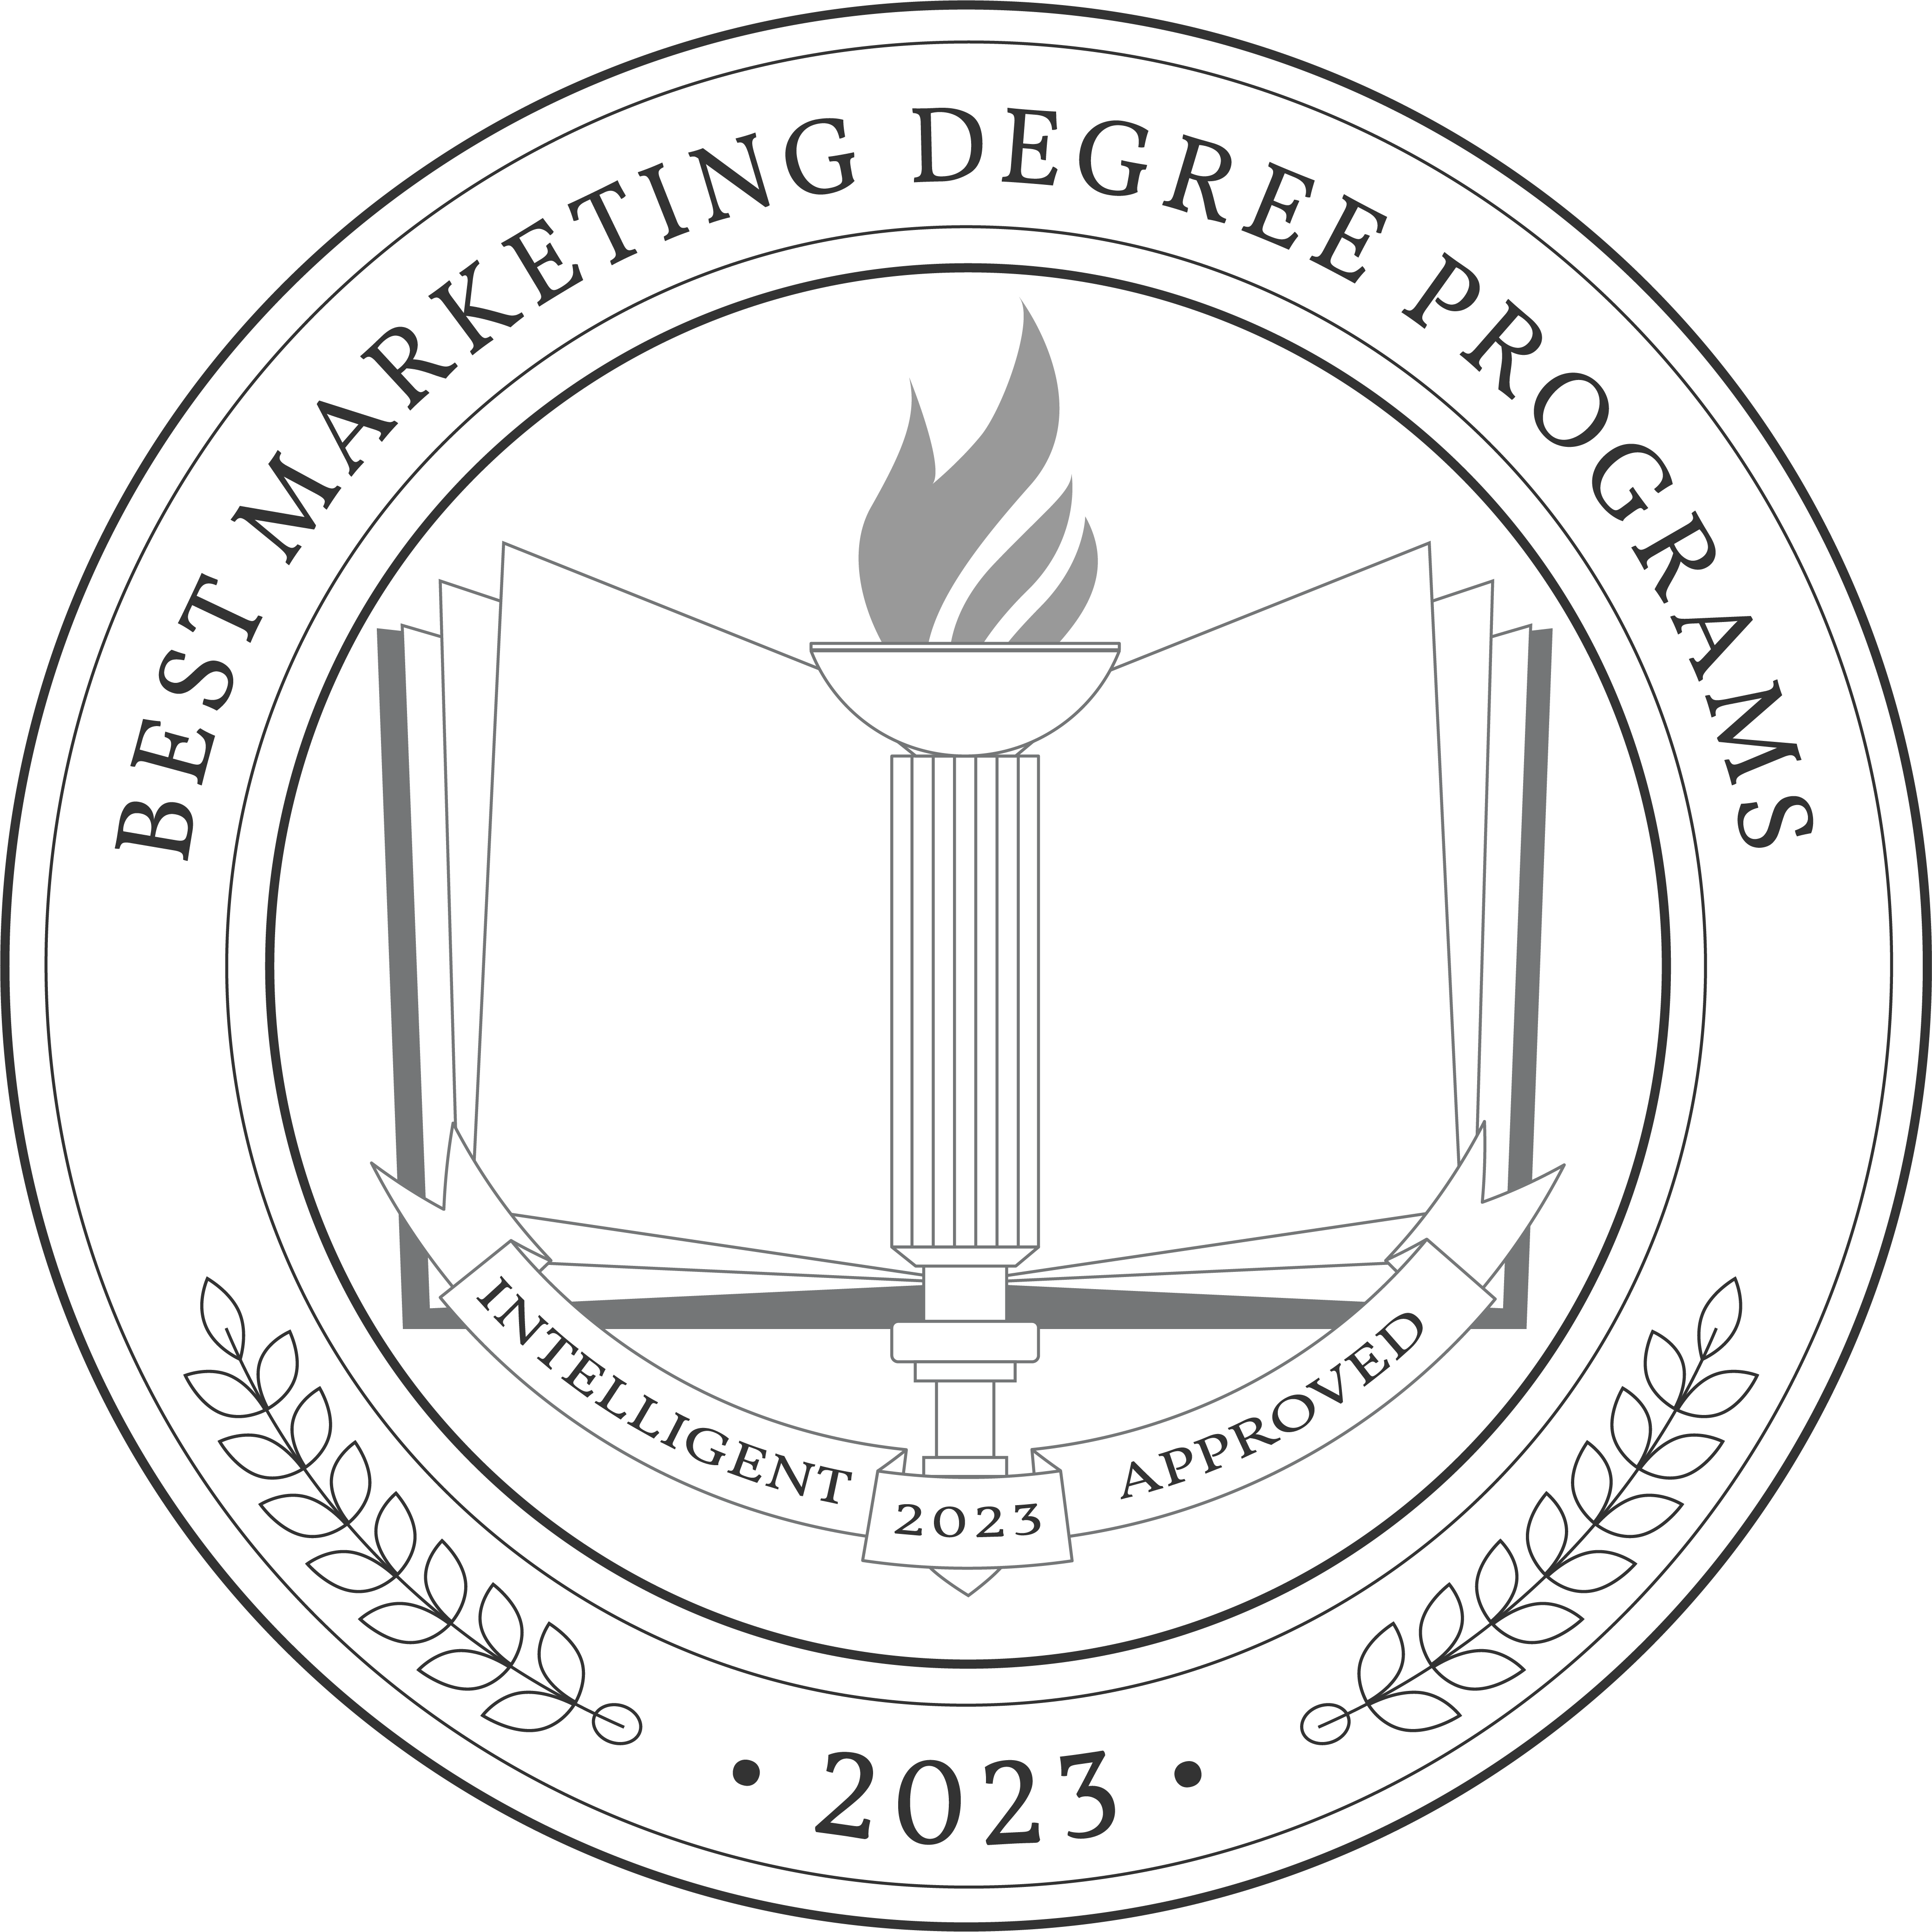 Best Marketing Degree Programs 2023